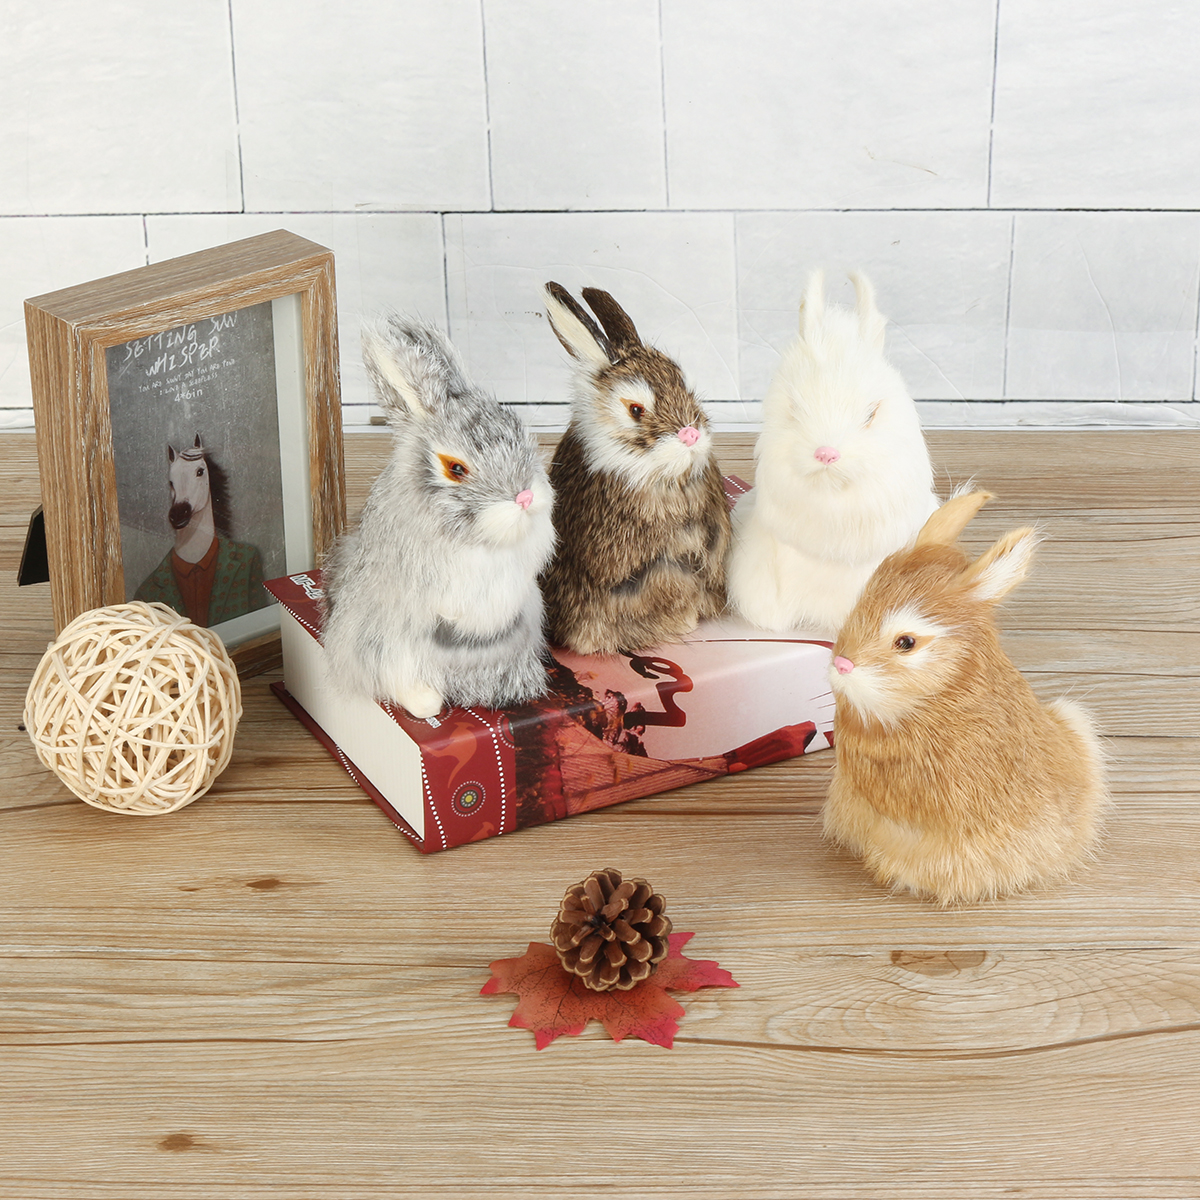 GrayYellowBrownWhite-Rabbits-Handmade-Easter-Bunnies-Home-Decorations-Desktop-Ornament-1452976-2